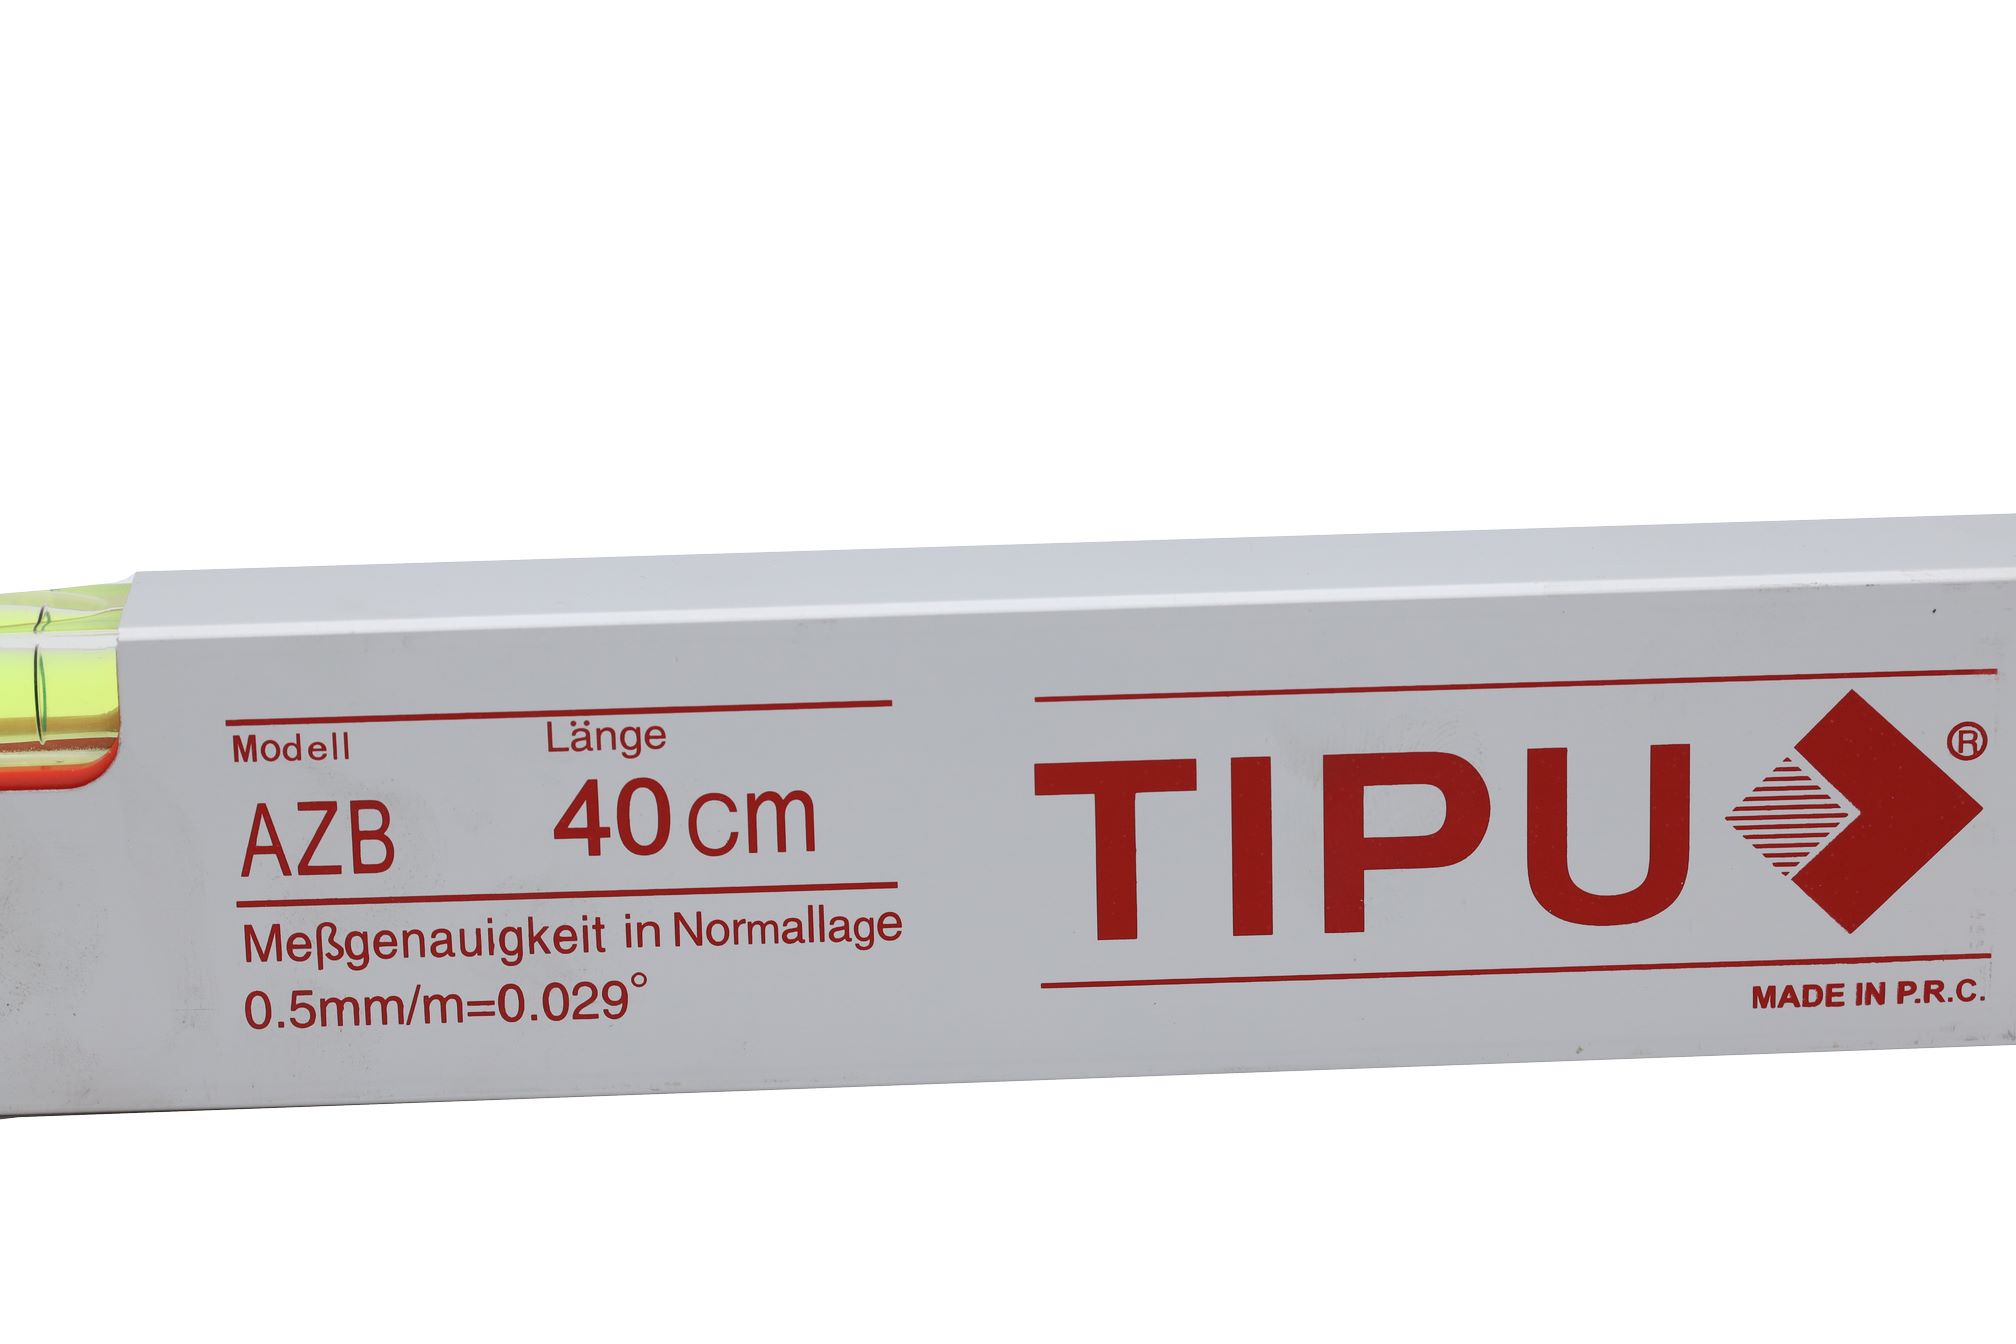 Buy TIPU ALU SPIRIT LEVEL 40CM Online | Hardware Tools | Qetaat.com